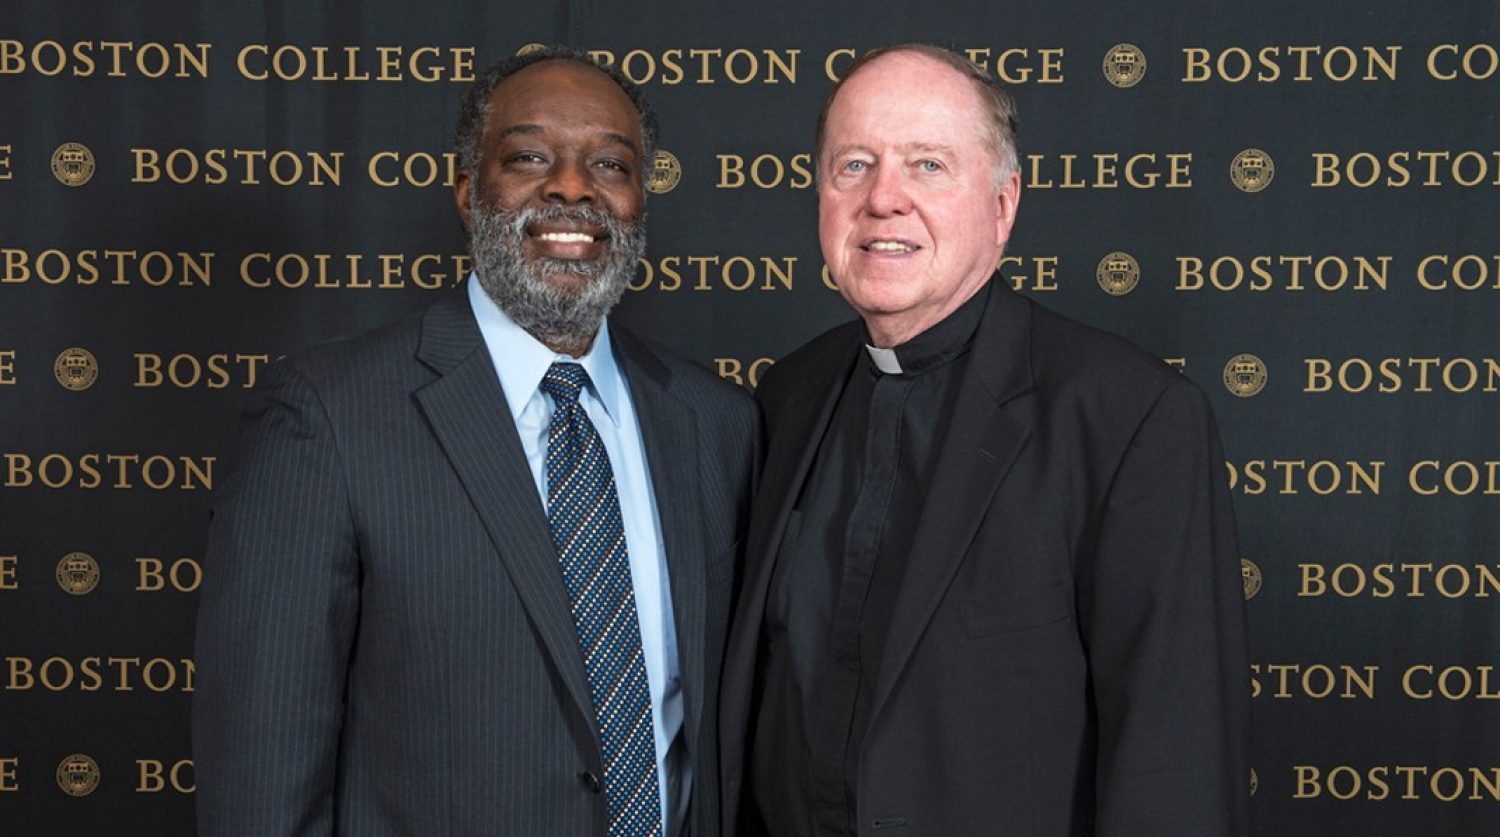 Boston College Community Service Award winner Dan Bunch and University President William P. Leahy, S.J. 